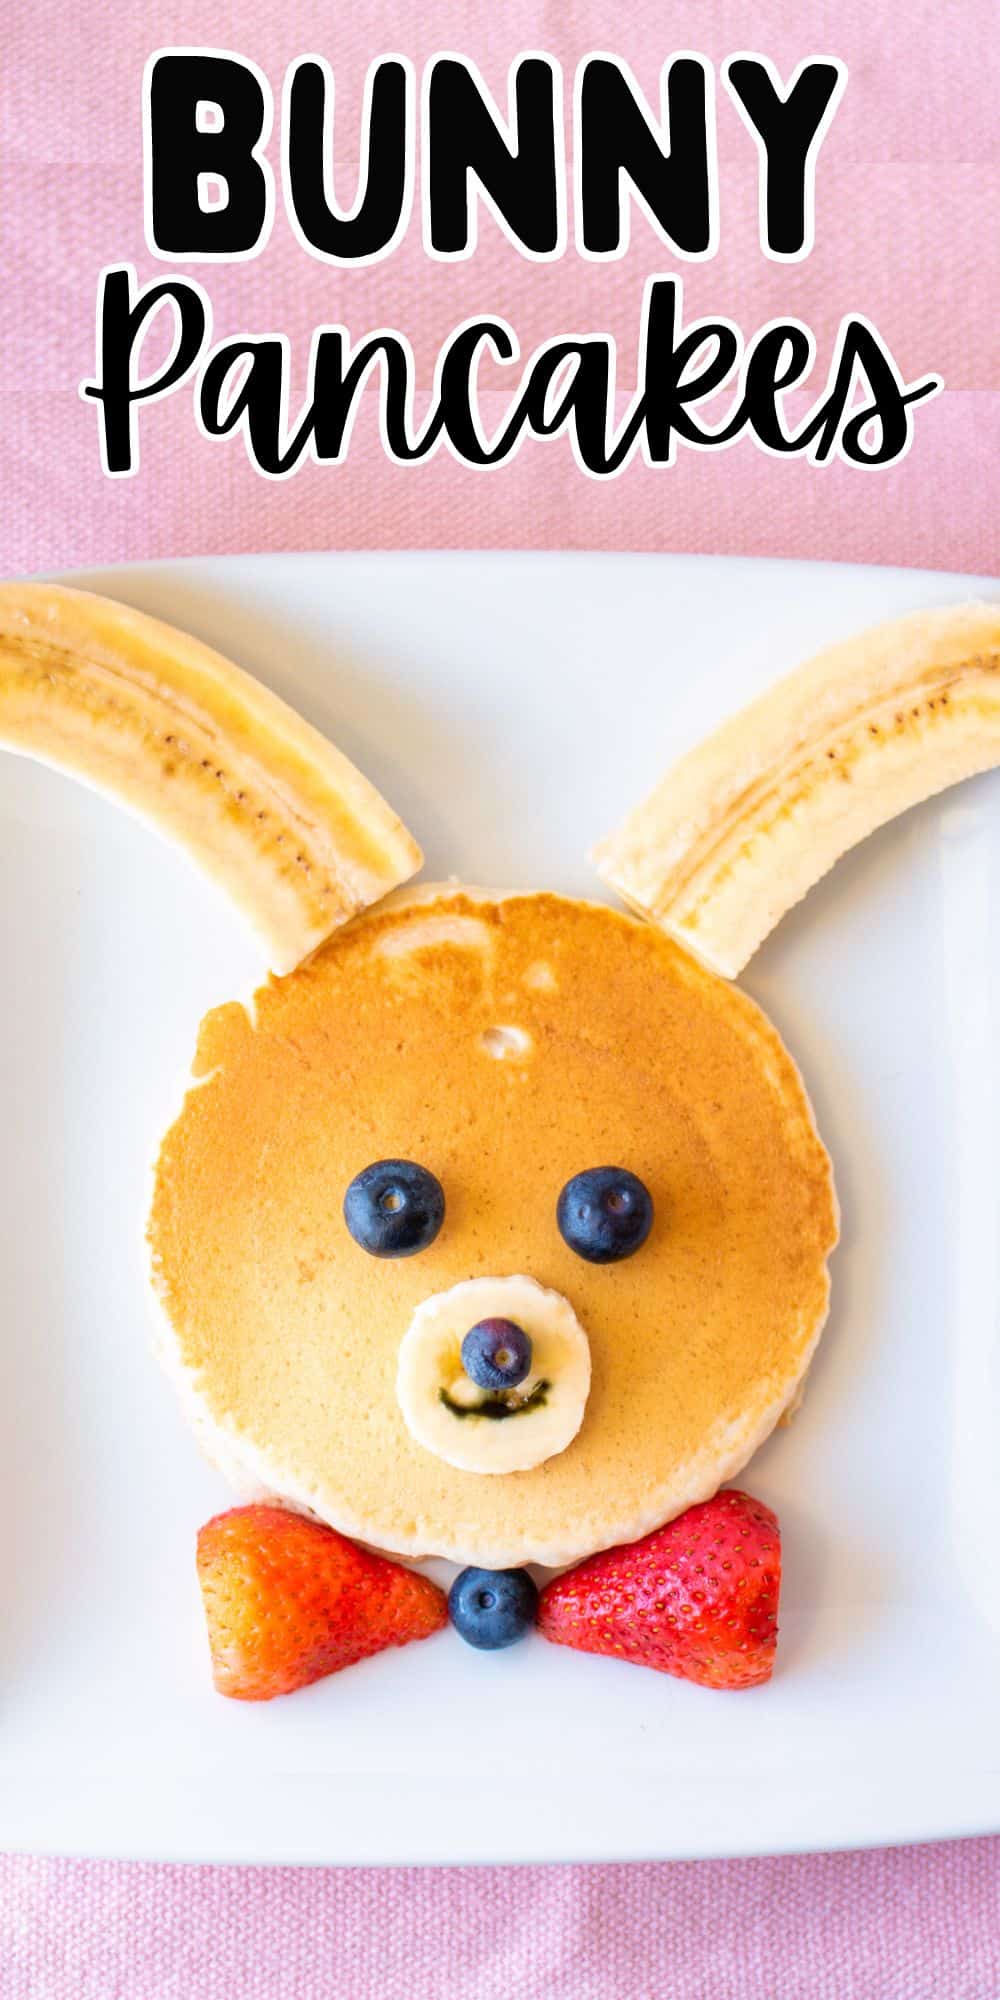 Bunny pancakes Pinterest image.